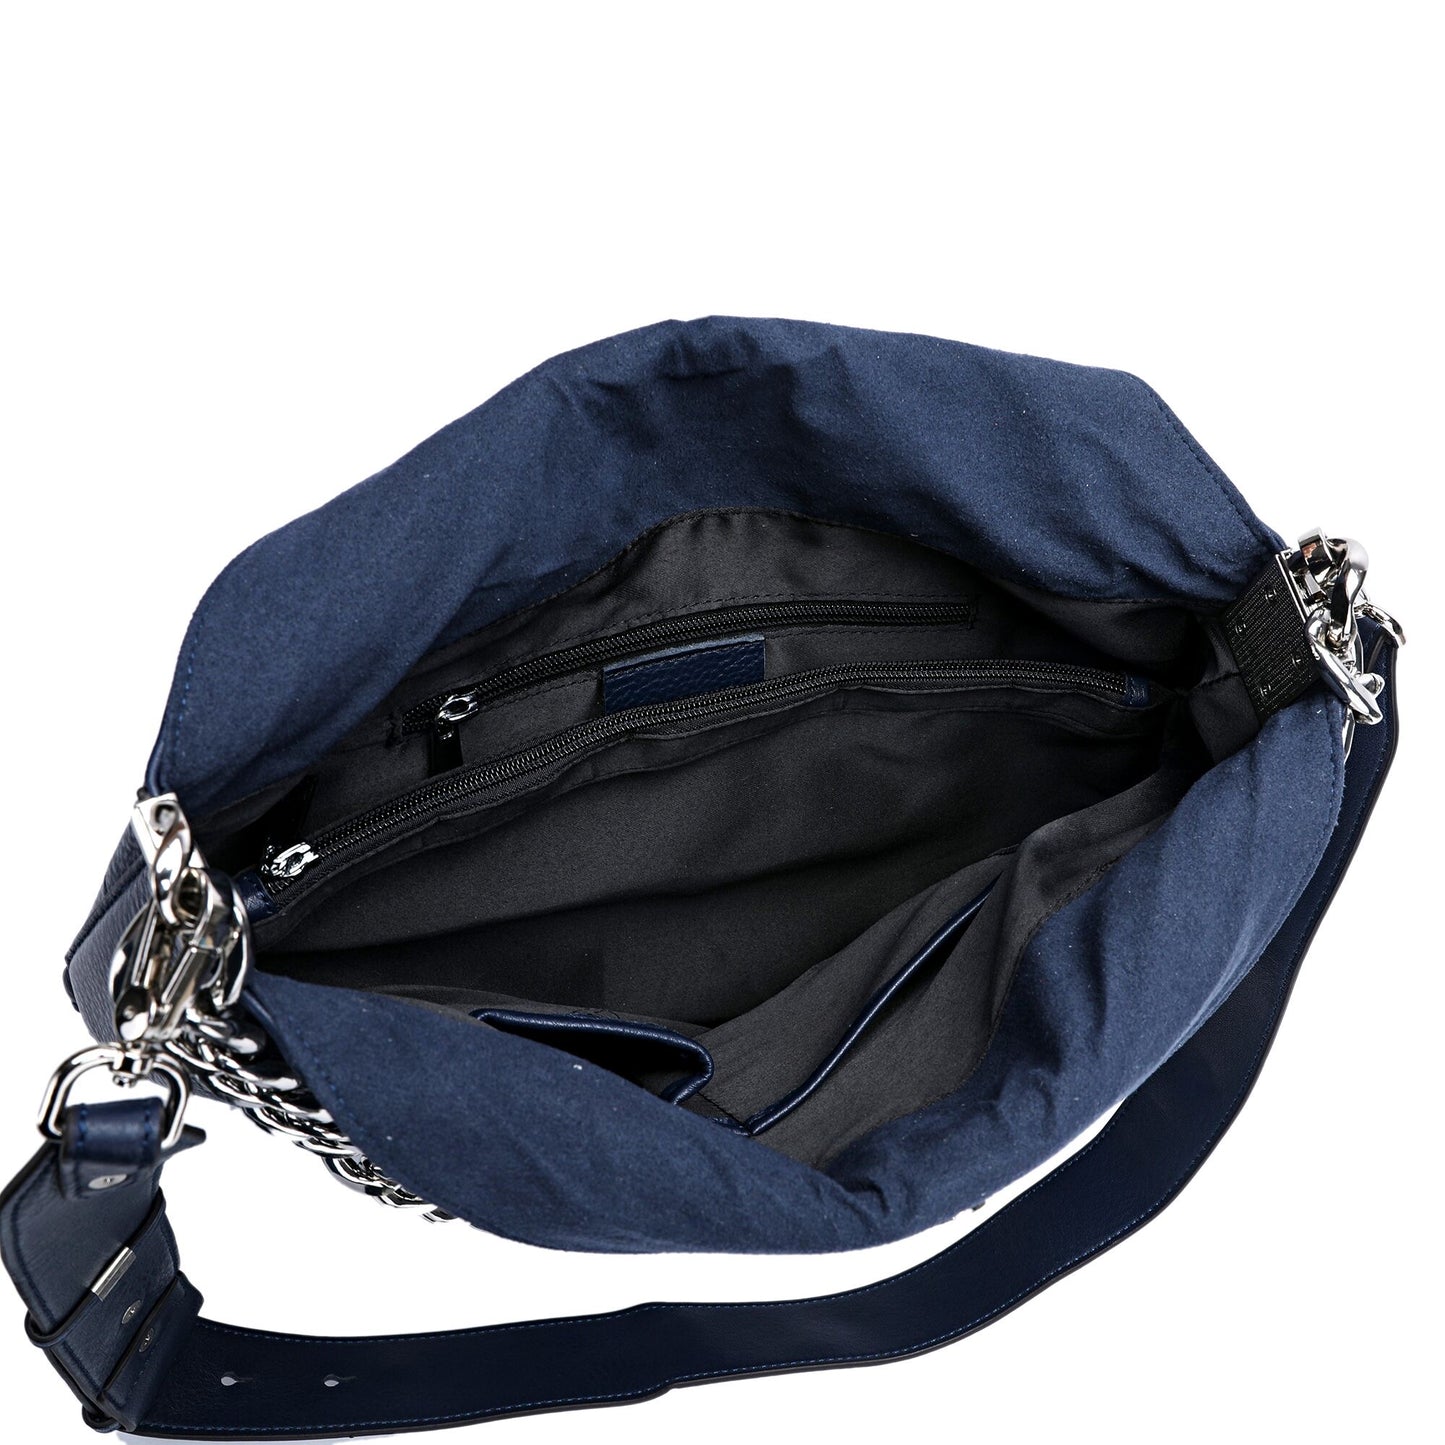 Full-grain Napa Leather Hobo/ Tote Bag